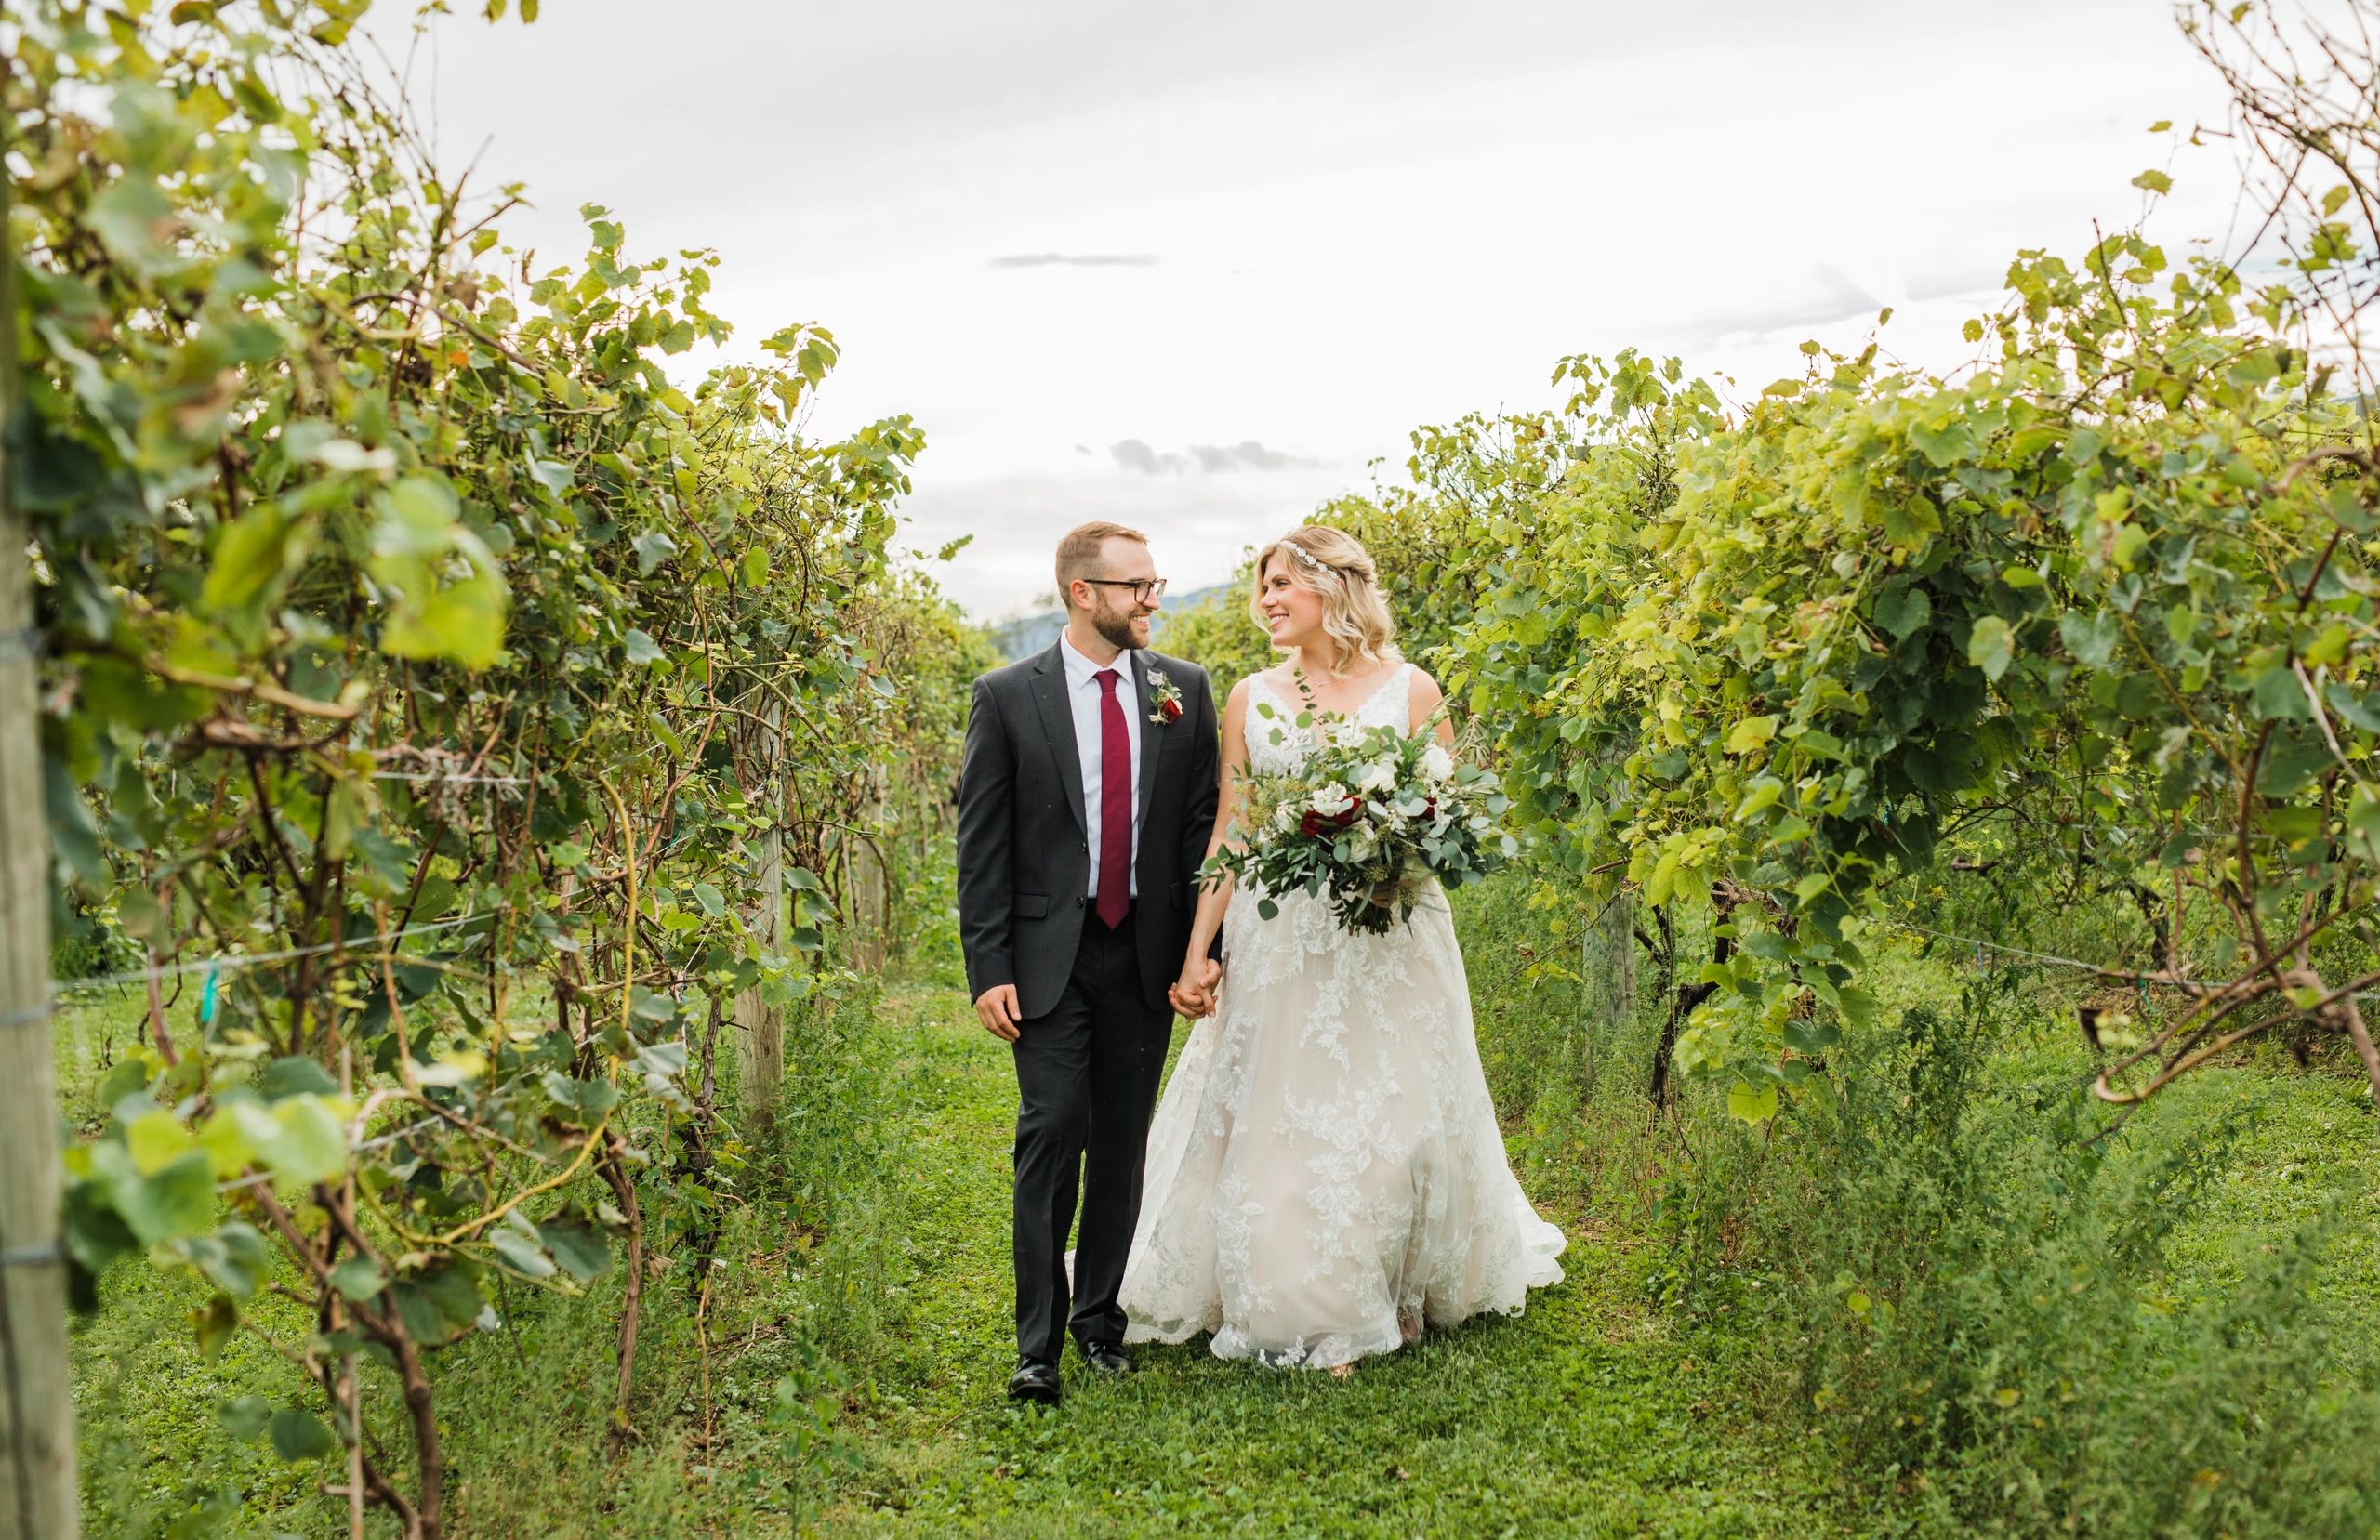 Juniata Valley Winery outdoor wedding